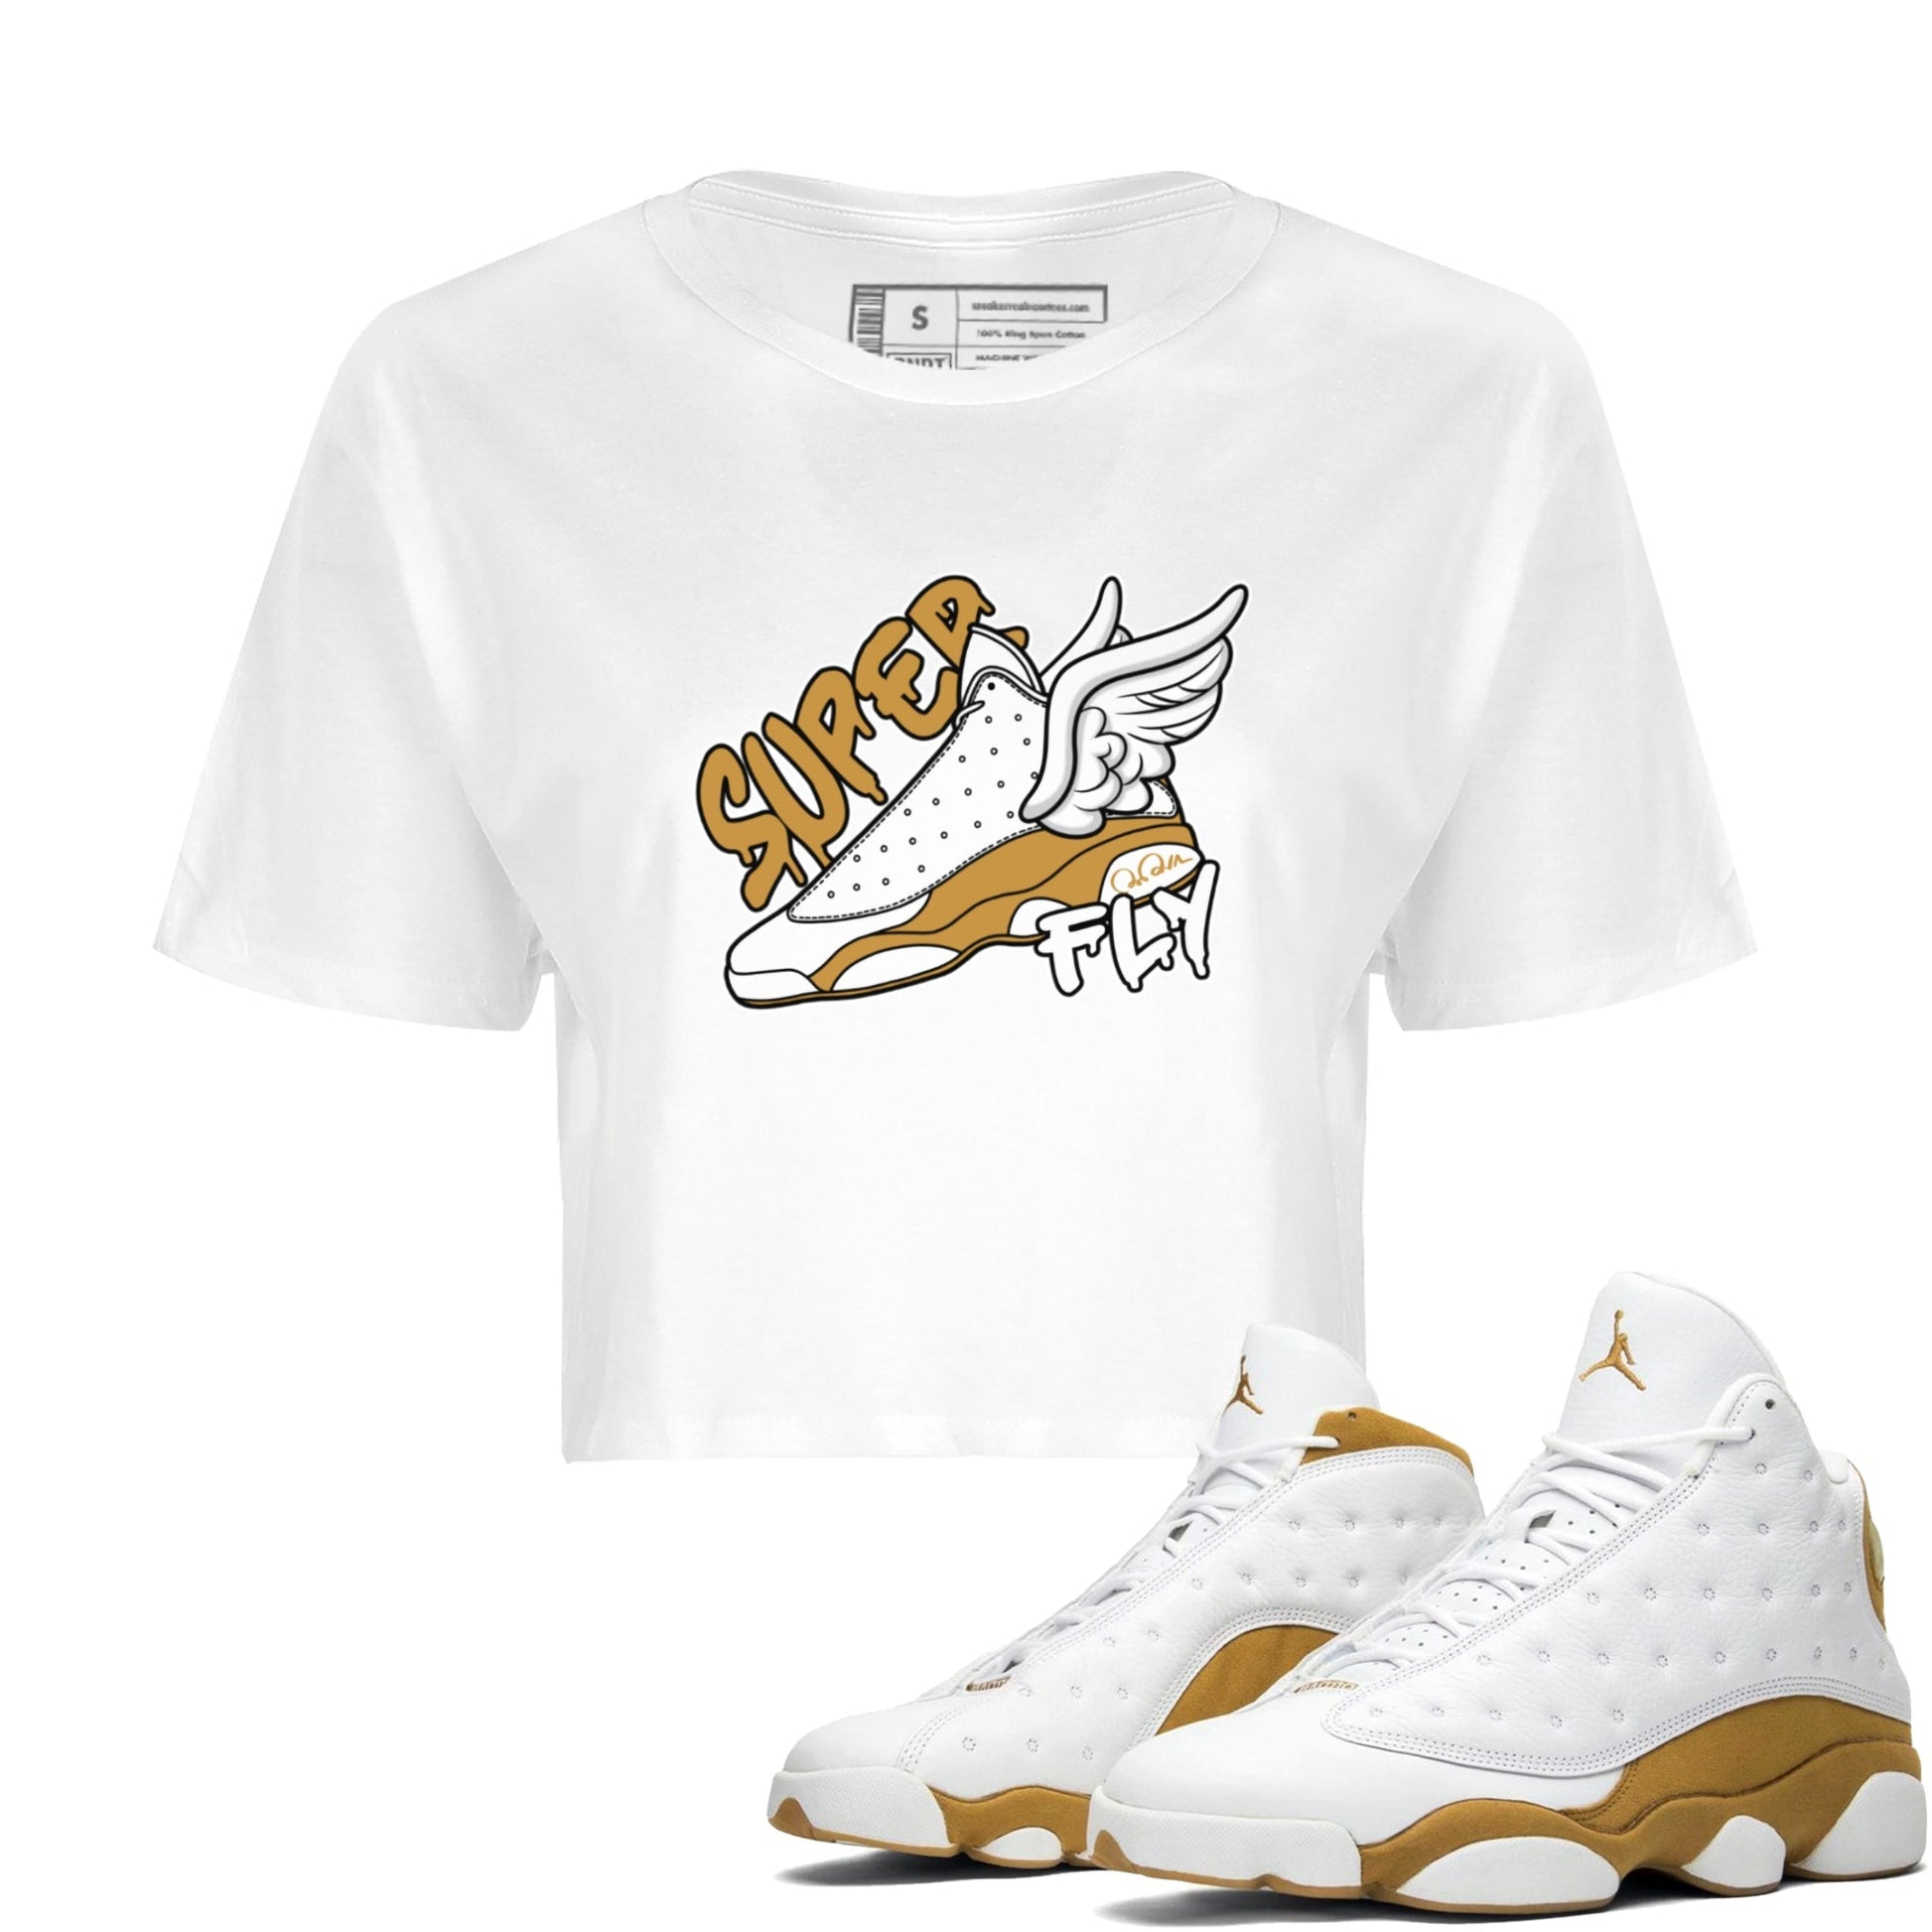 Air Jordan 13 Wheat Sneaker Match Tees Super Fly Sneaker Tees AJ13 Wheat Sneaker Release Tees Women's Shirts White 1